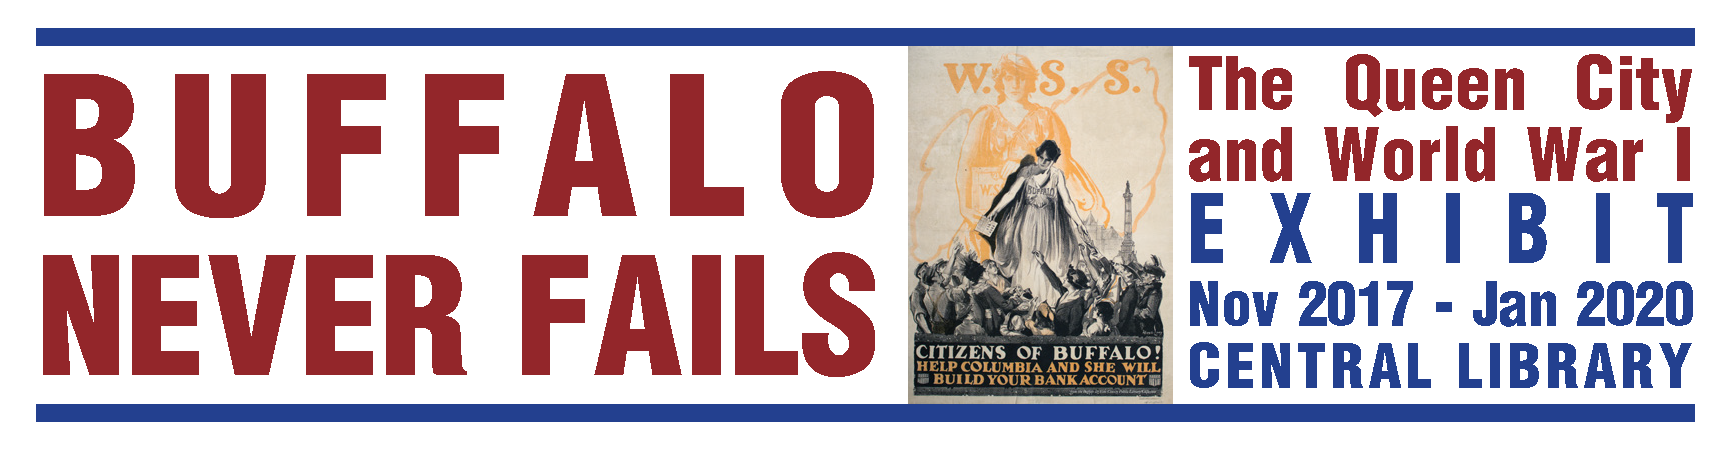 Buffalo Never Fails:  The Queen City and World War I 